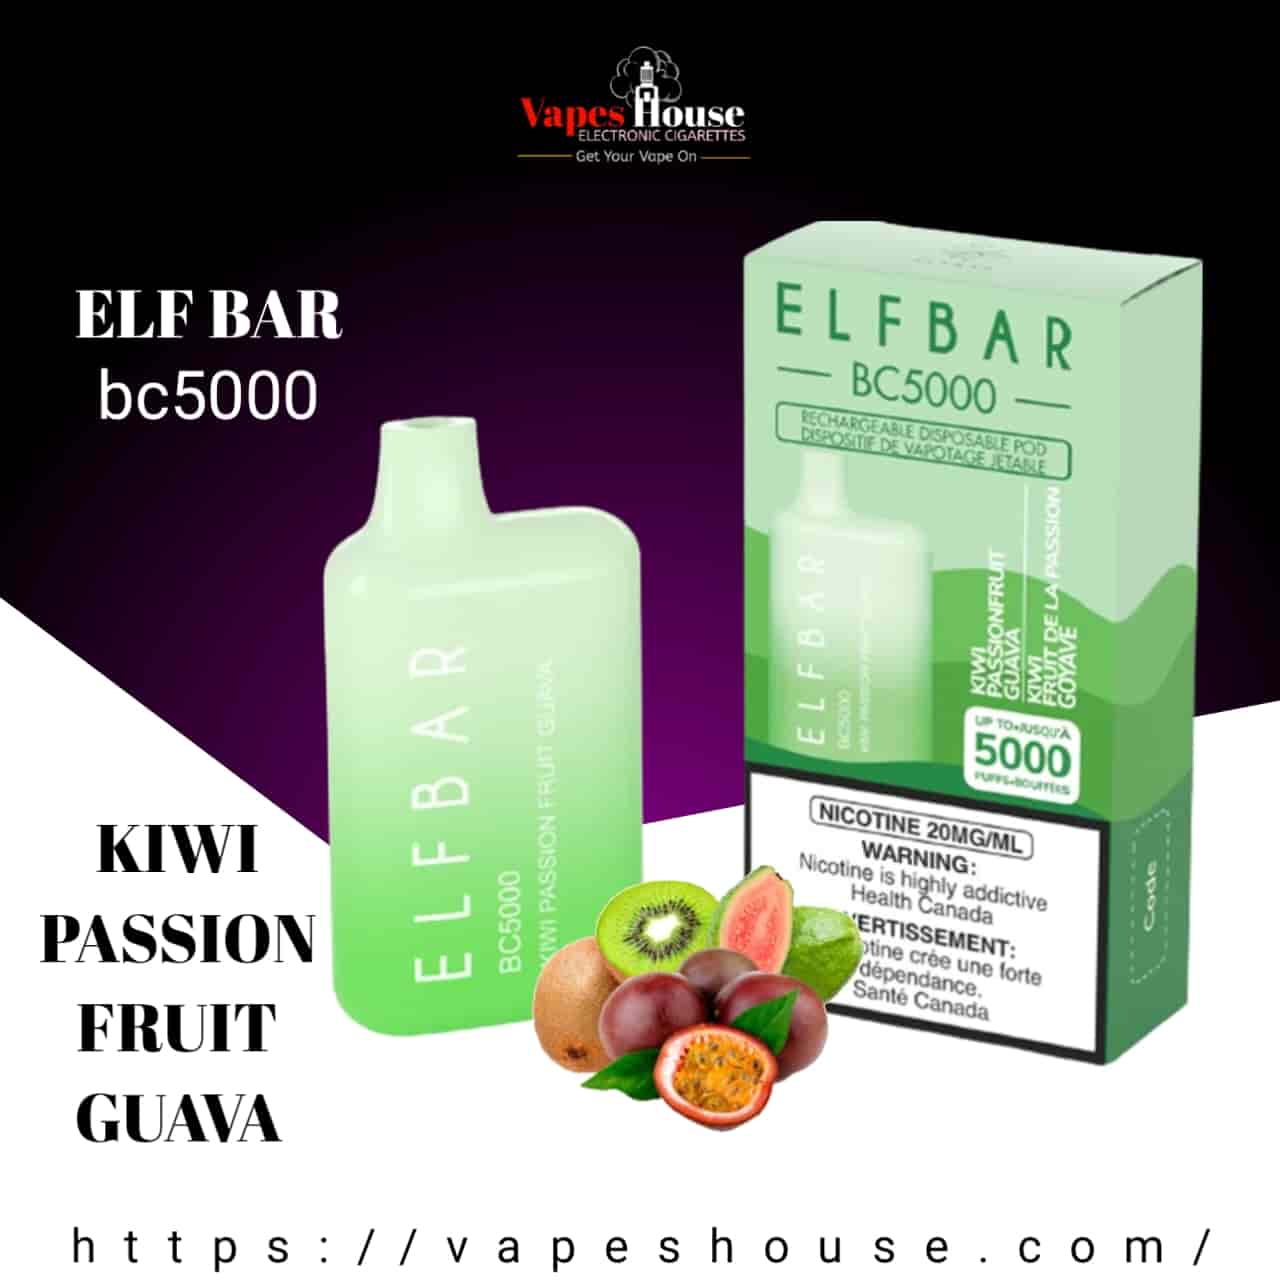 elf bar bc5000 kiwi passion fruit guava